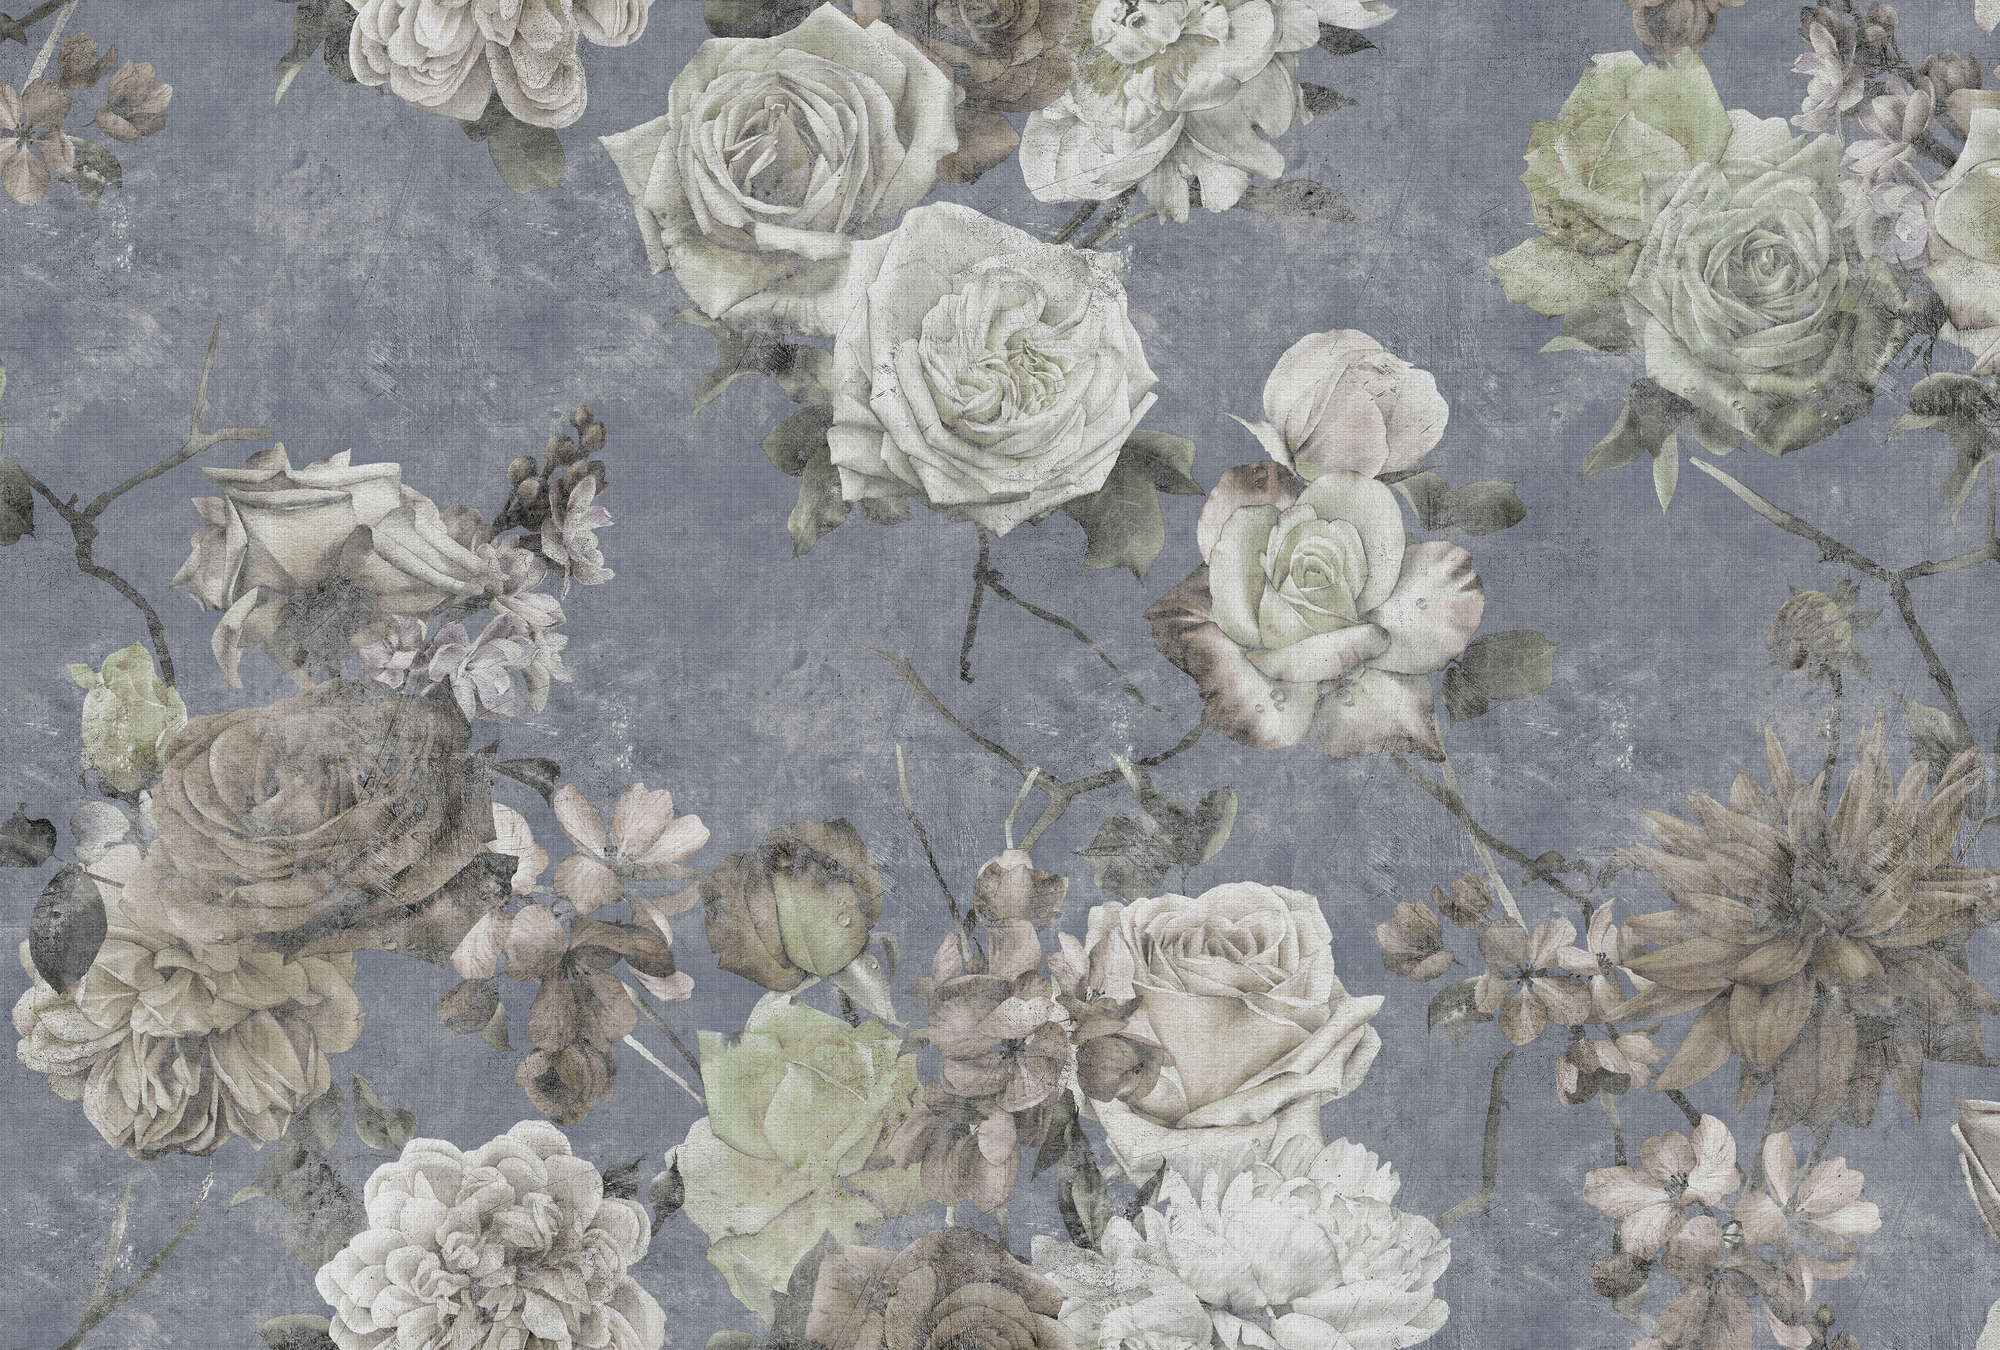             Sleeping Beauty 3 - Papier peint rose vintage - texture lin naturel - bleu, blanc | Premium intissé lisse
        